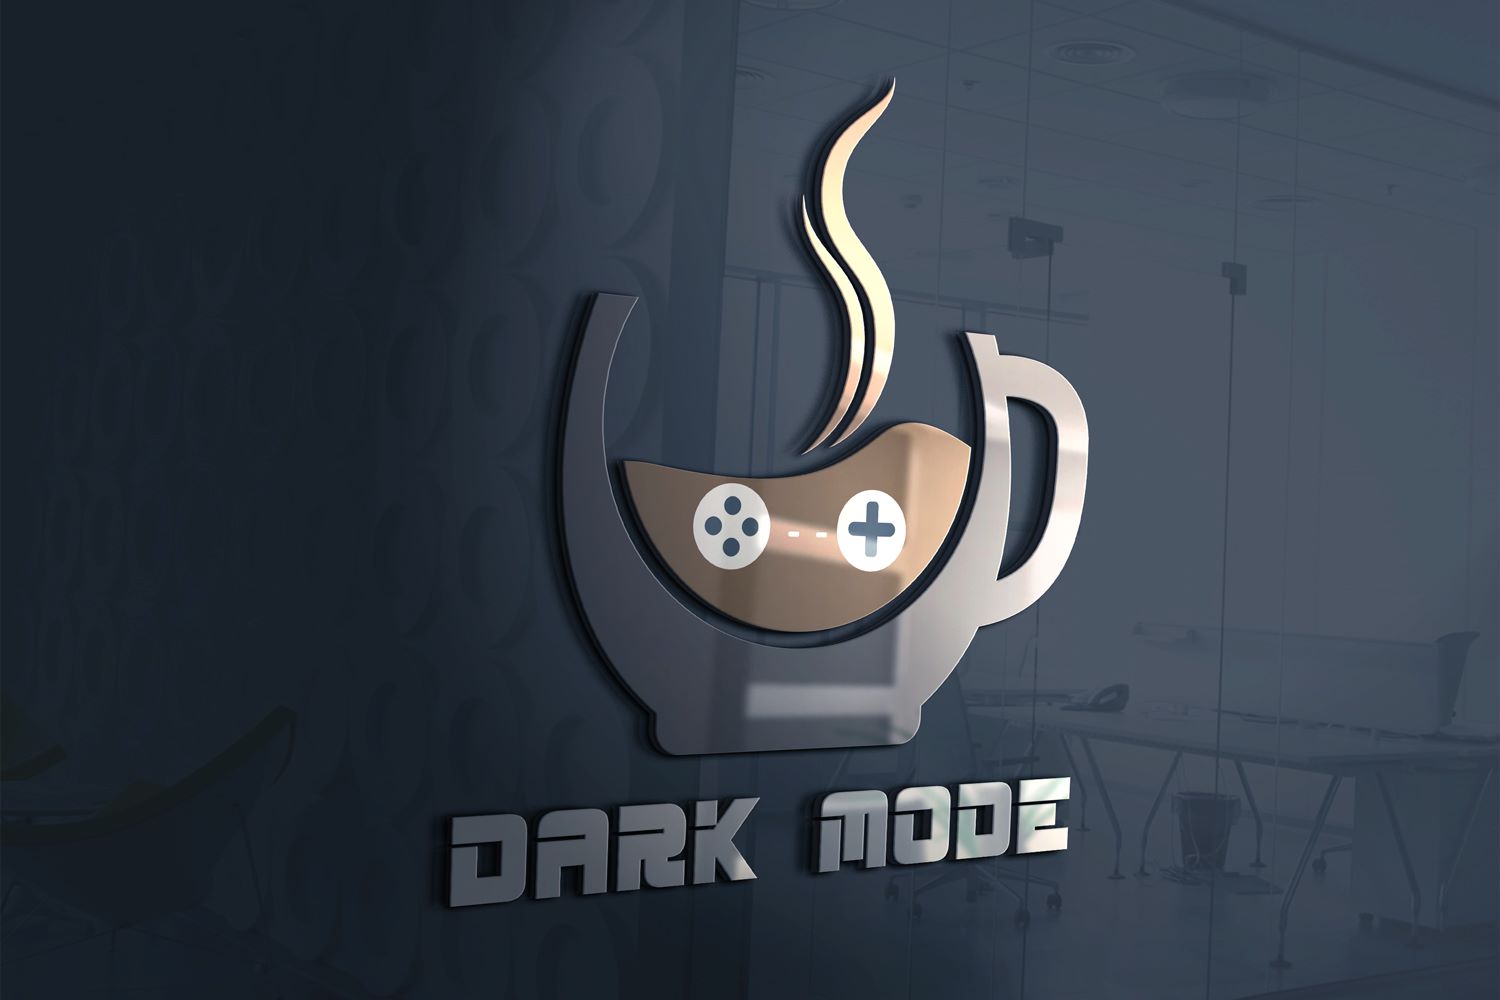 Dark Mode Coffee - Whole Bean